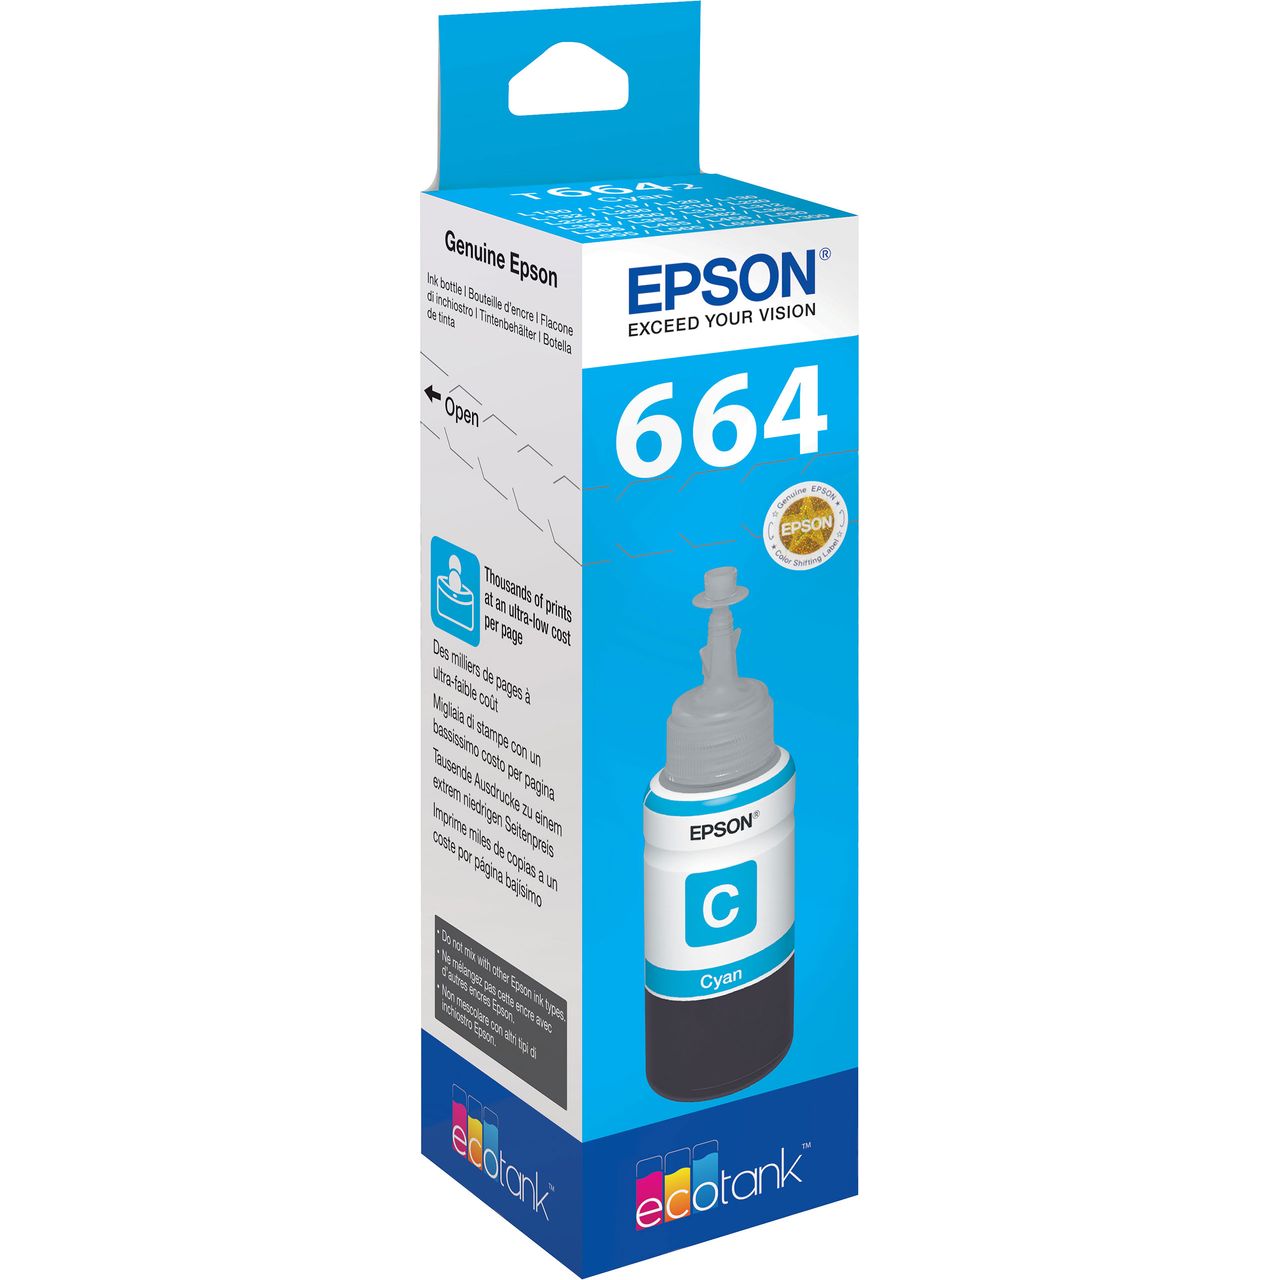 Epson EcoTank Cyan Ink Review